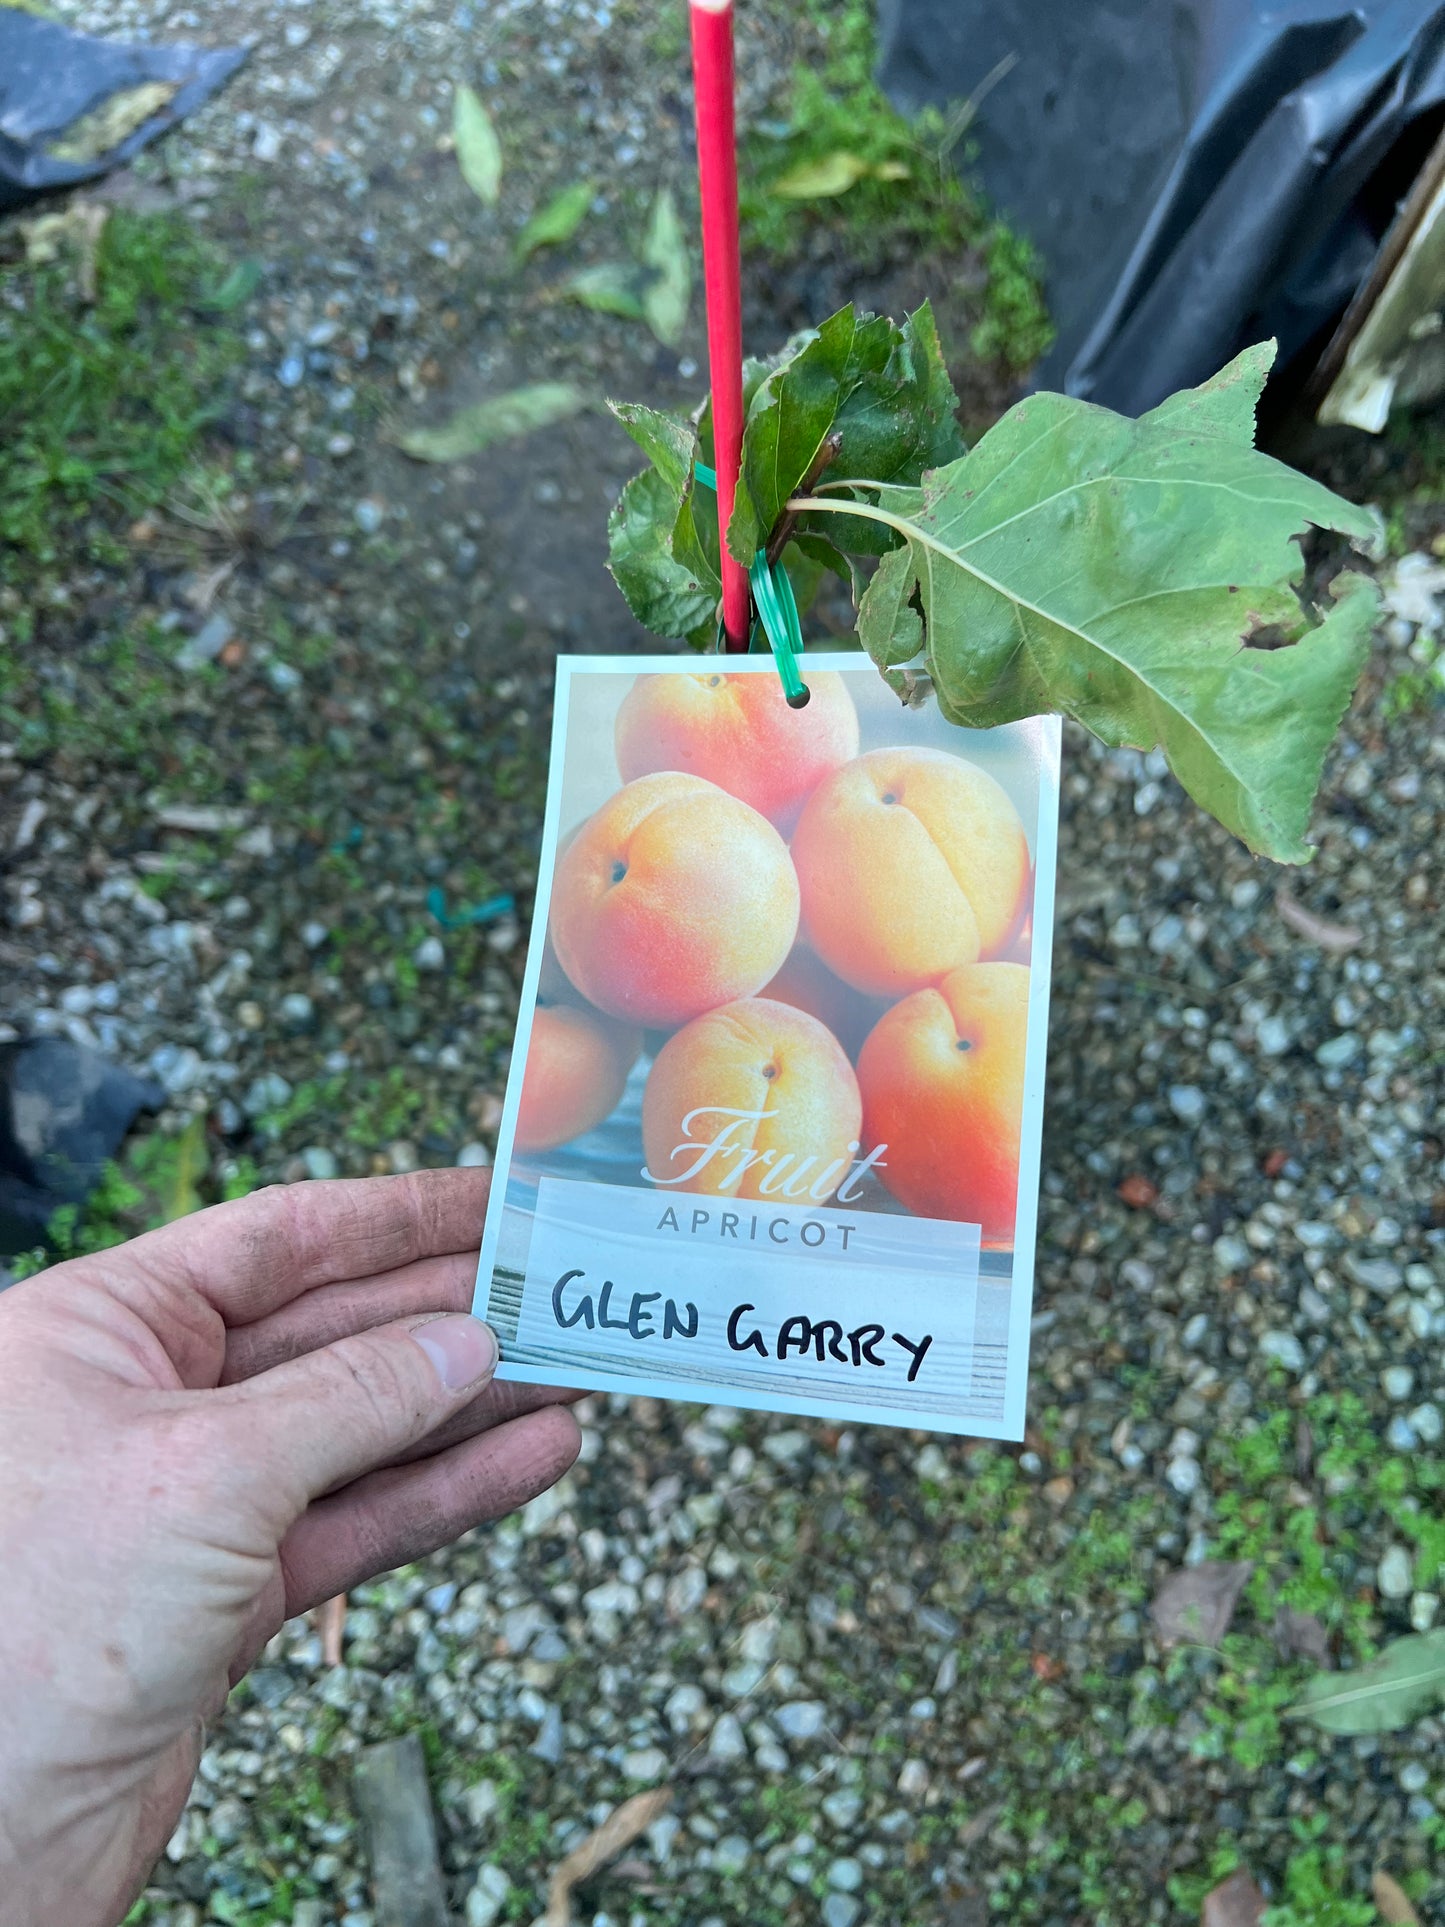 Apricot - Glengarry